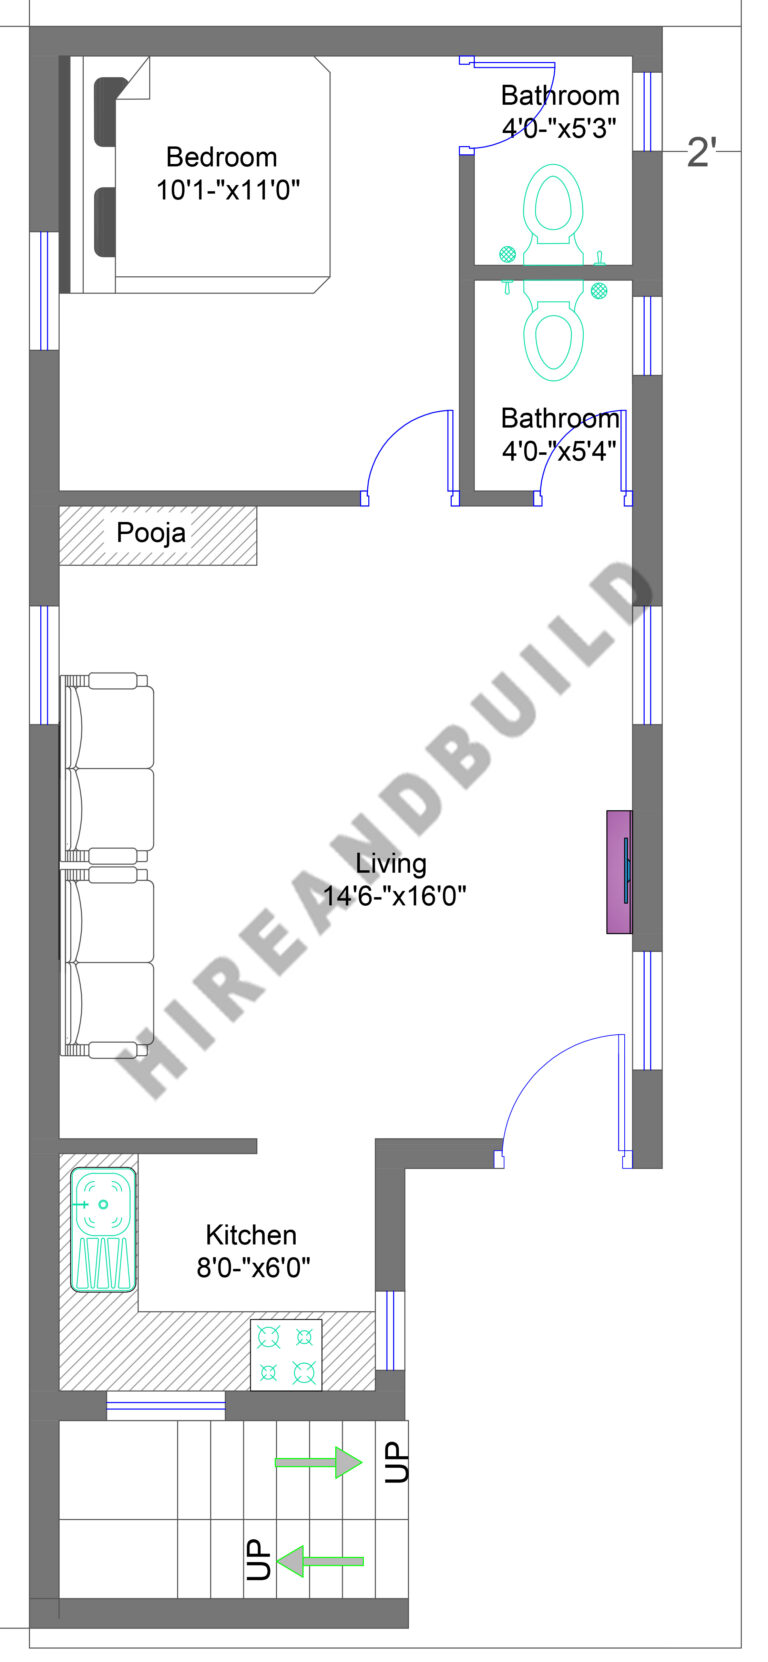 house plan of 700 sq ft: gf